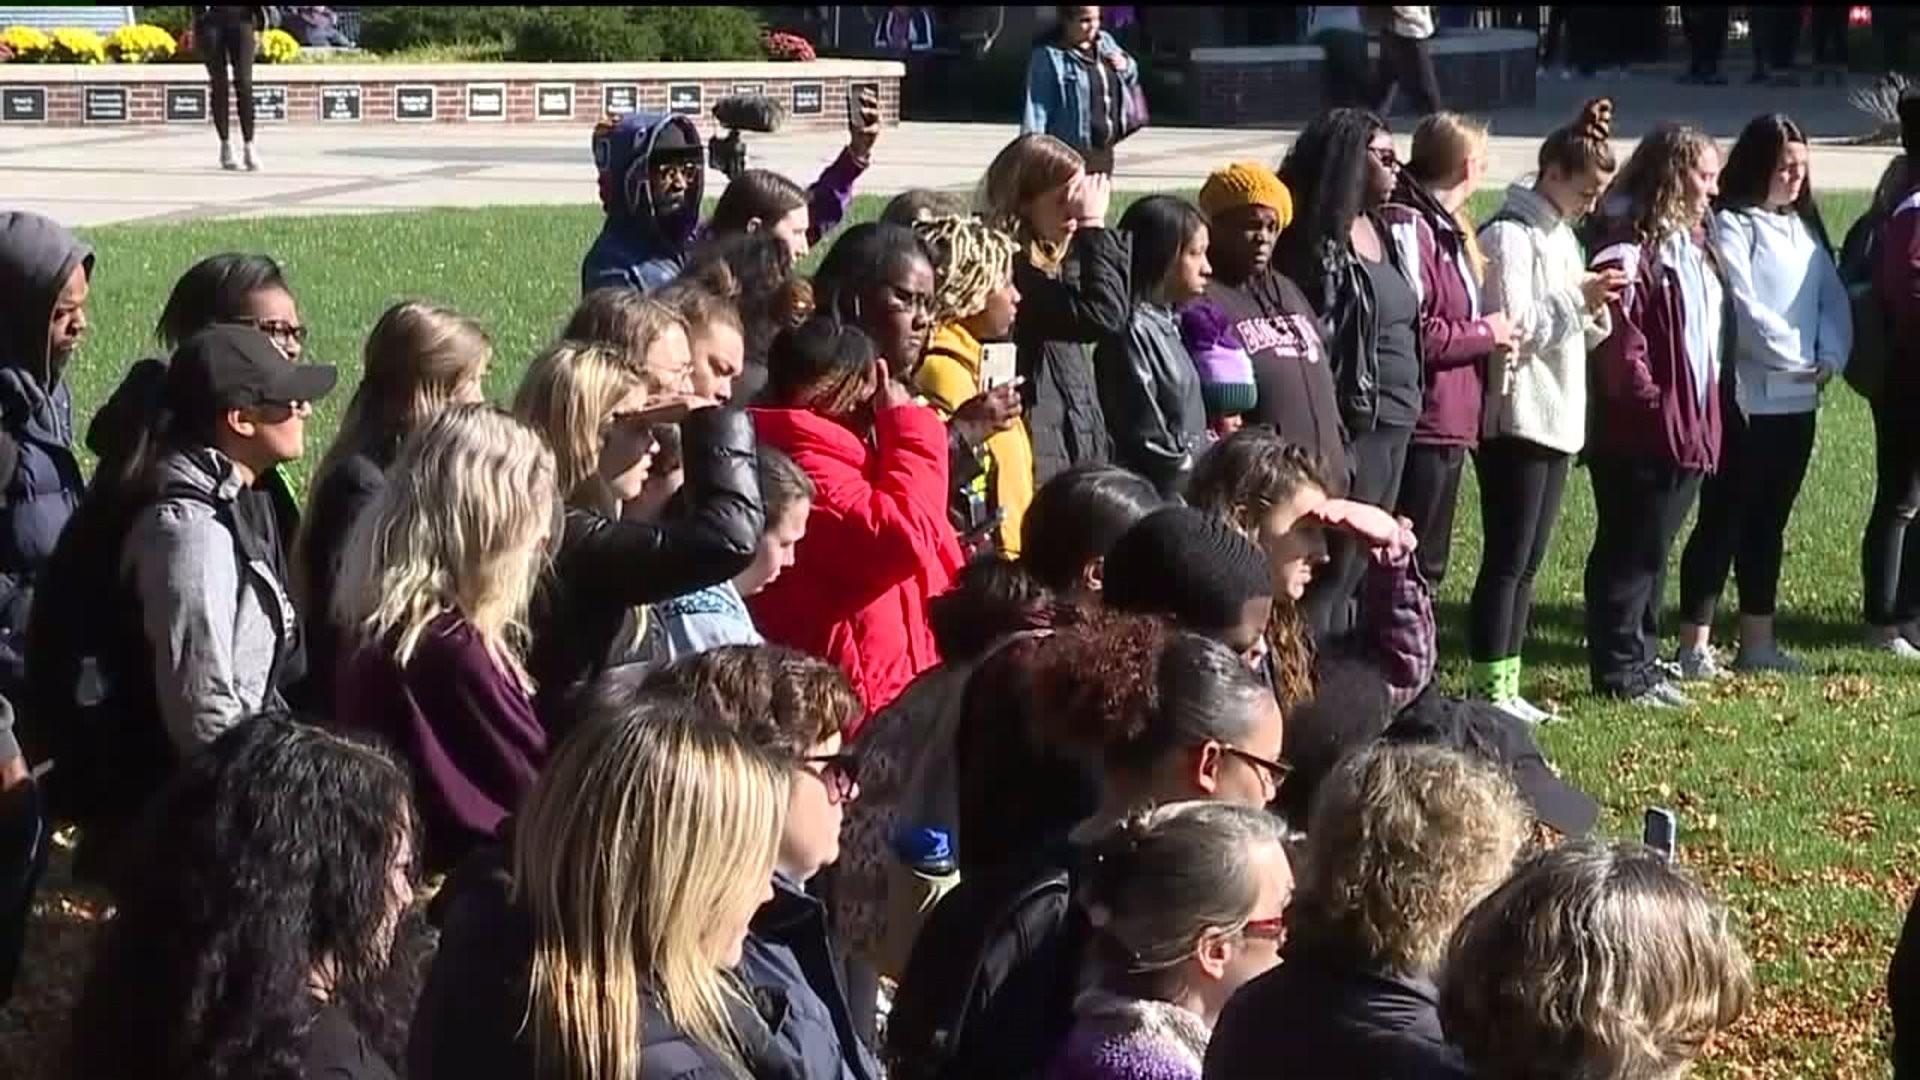 Bloomsburg Students Protest Racist Attitudes on Social Media